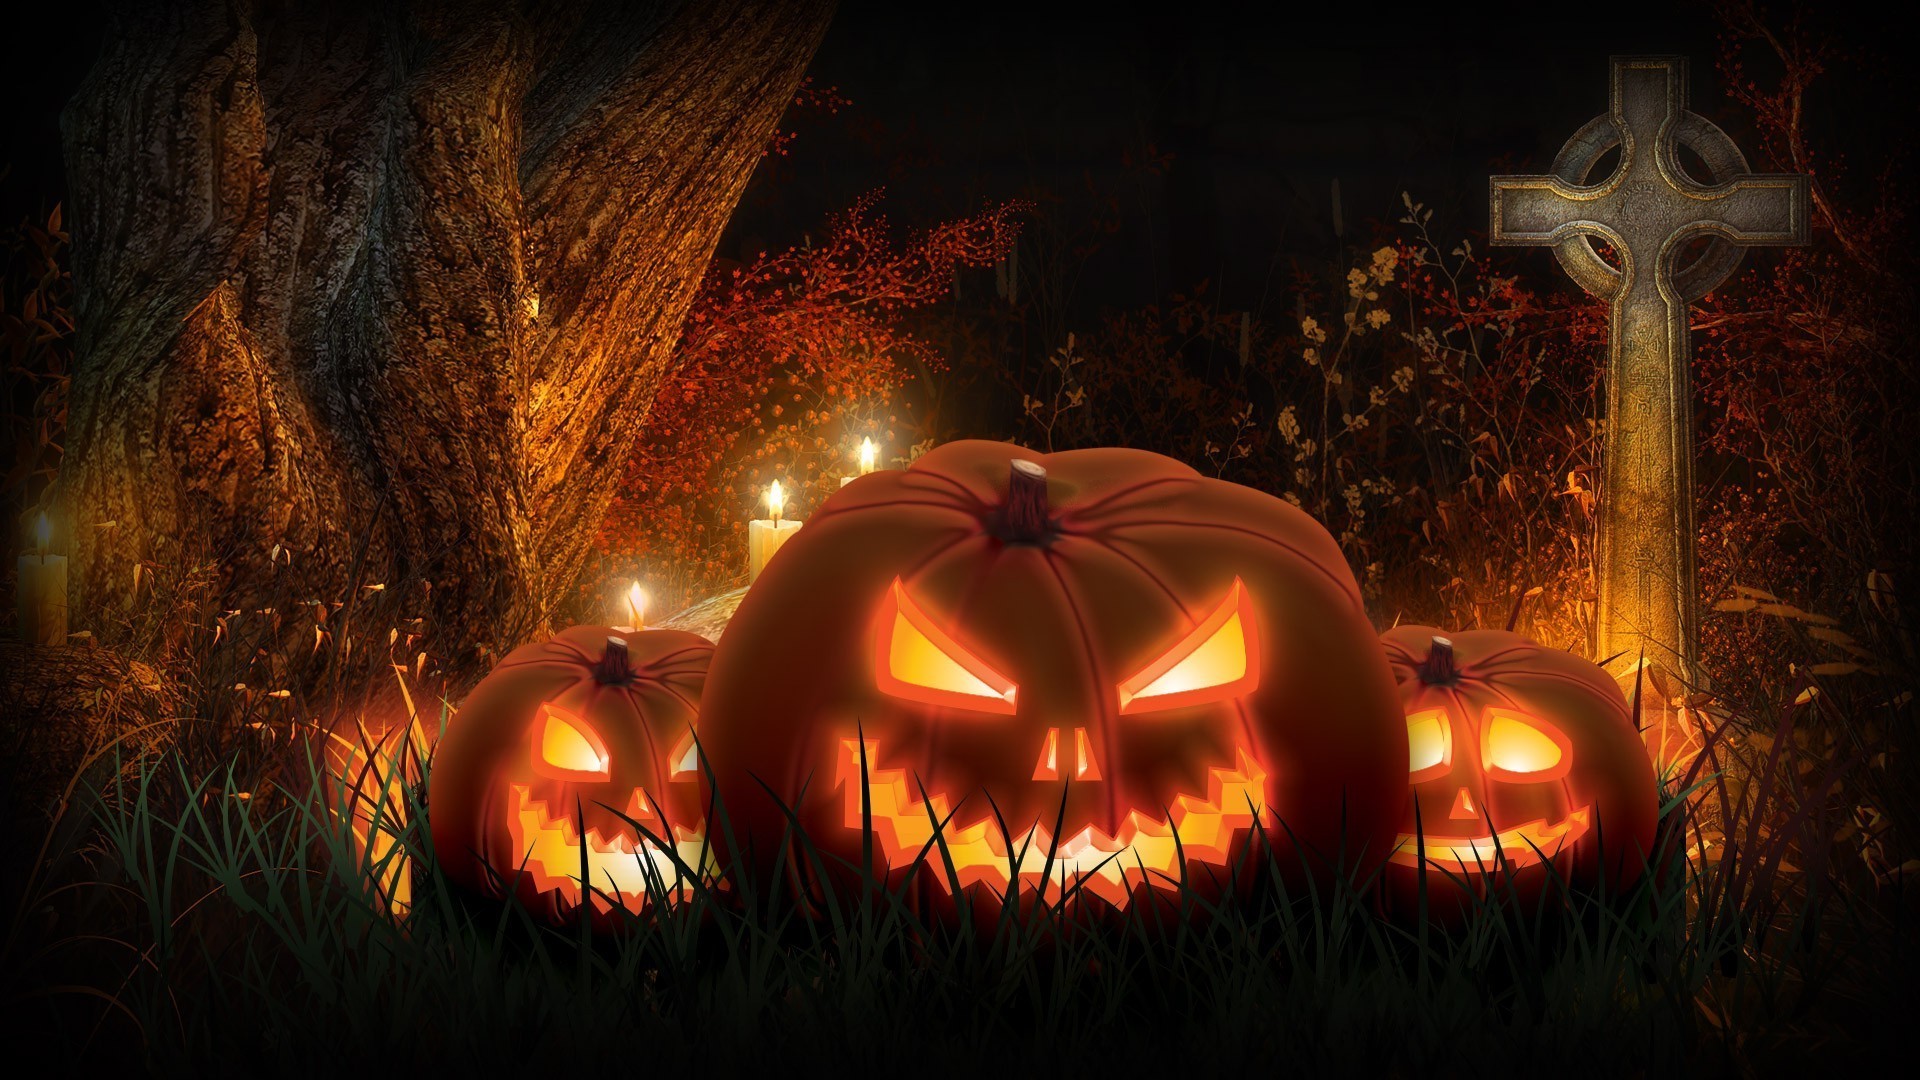 Facebook Halloween Jack Pumpkin Backgrounds.